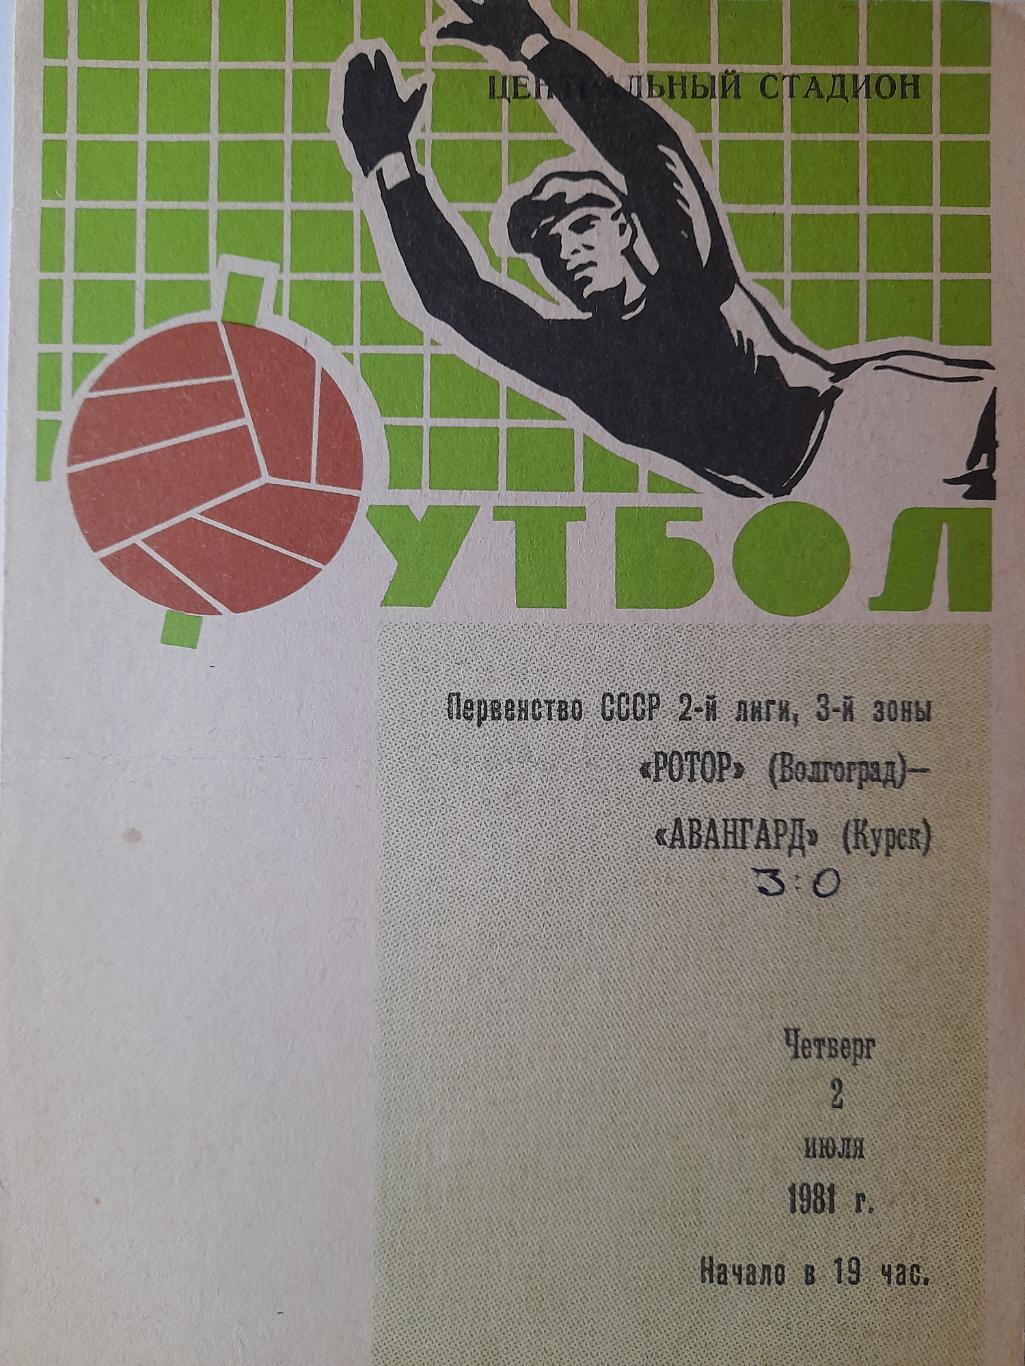 Ротор Волгоград - Авангард Курск, Первенство СССР, 02.07.1981г.